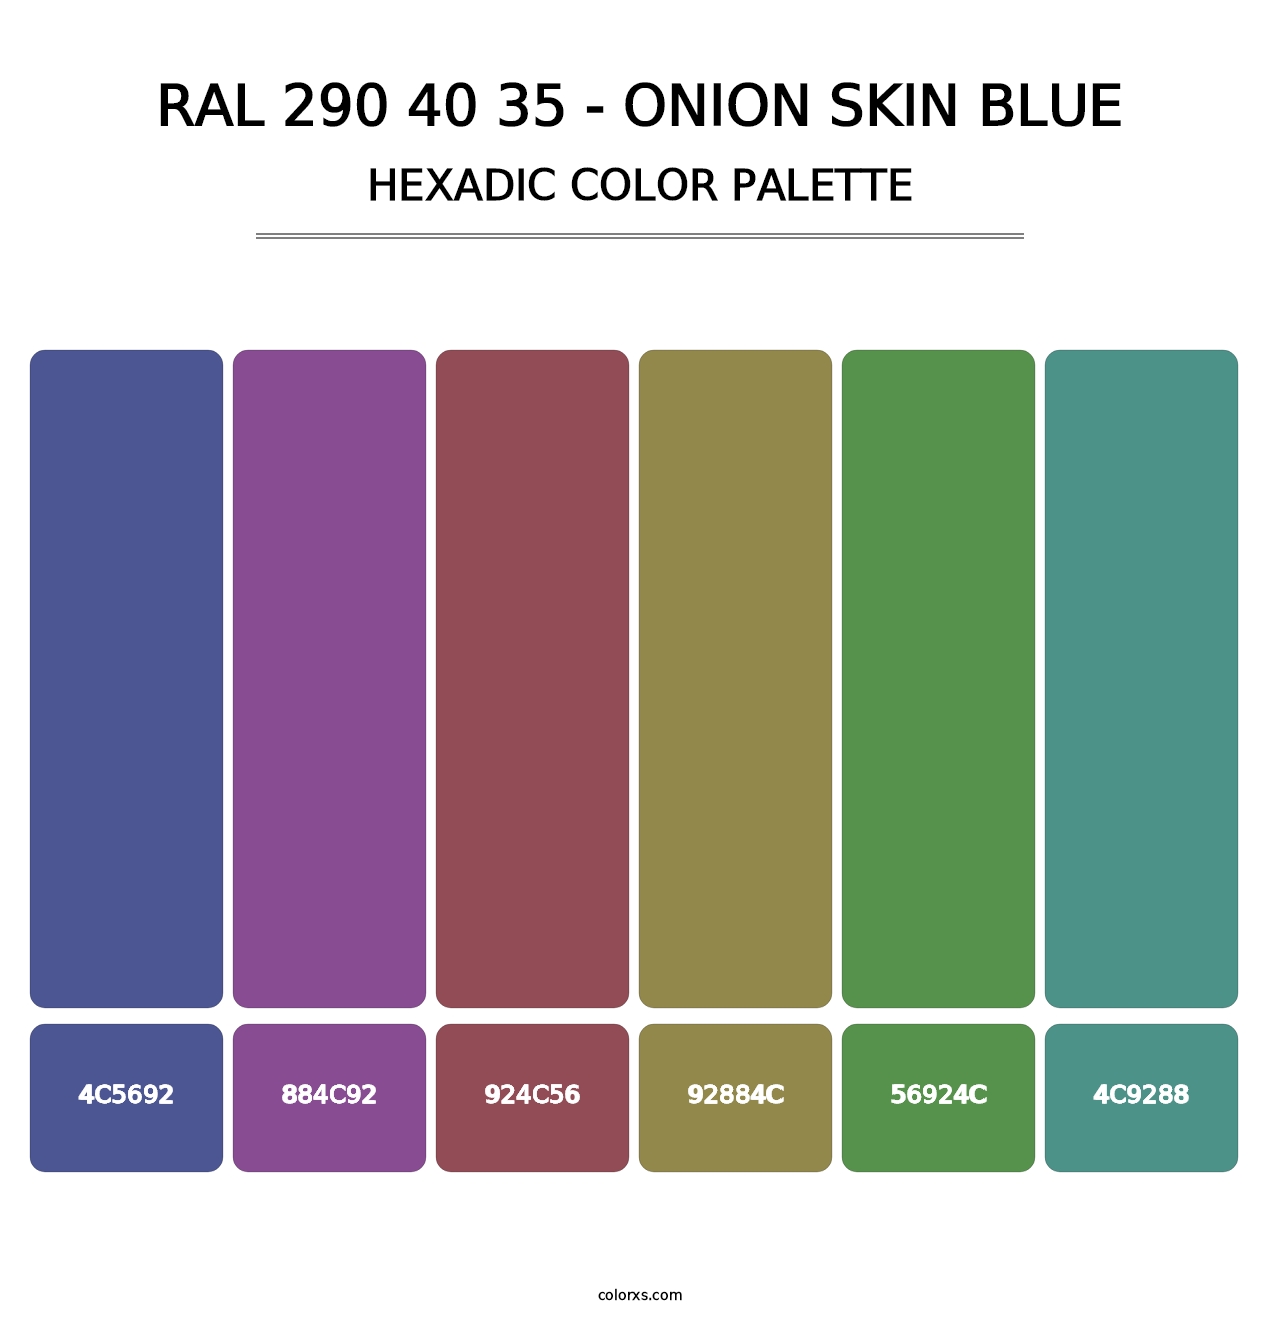 RAL 290 40 35 - Onion Skin Blue - Hexadic Color Palette